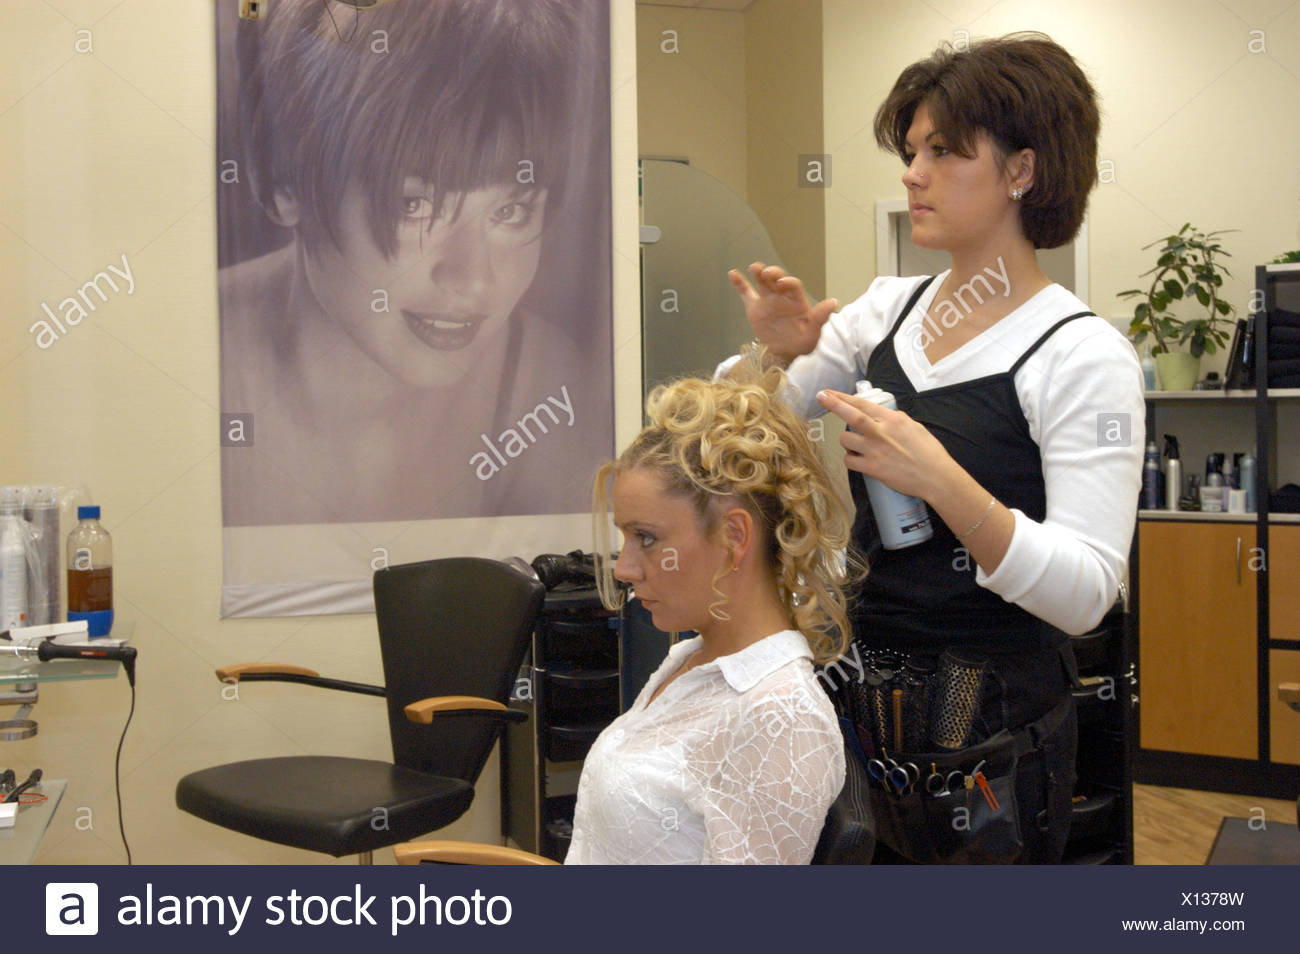 Berlin Hairdresser Teased A Customer Stock Photo 276052137 Alamy